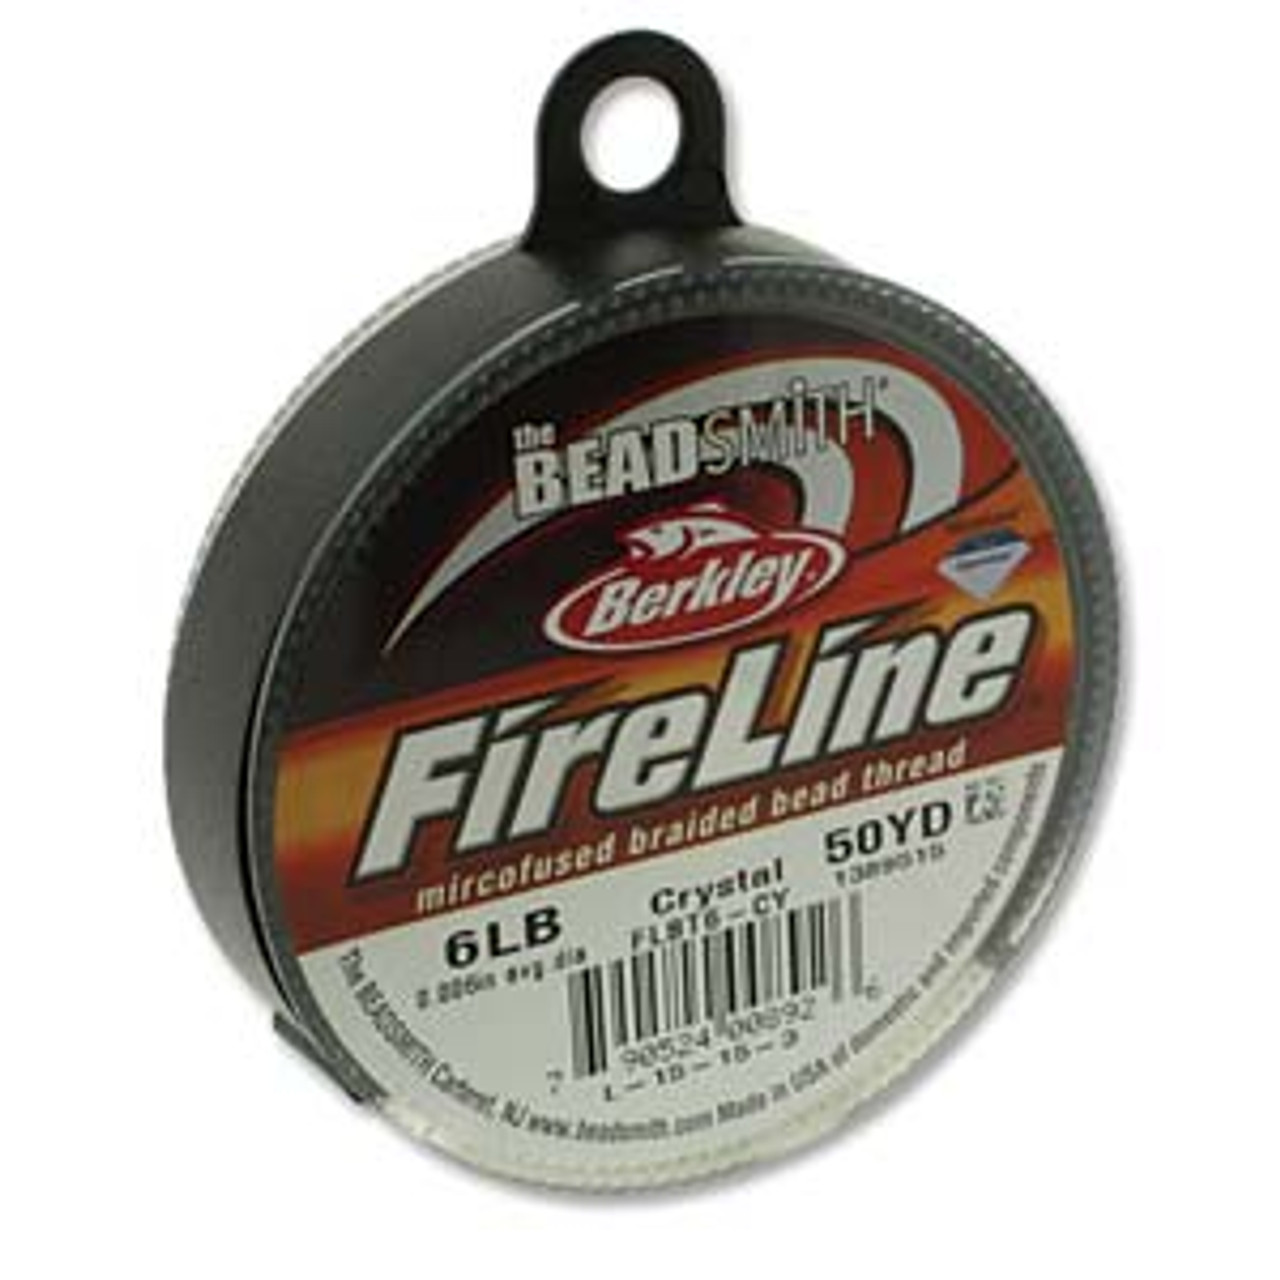 FireLine® Crystal Clear .006 Bead Thread, 50 Yds. - RioGrande